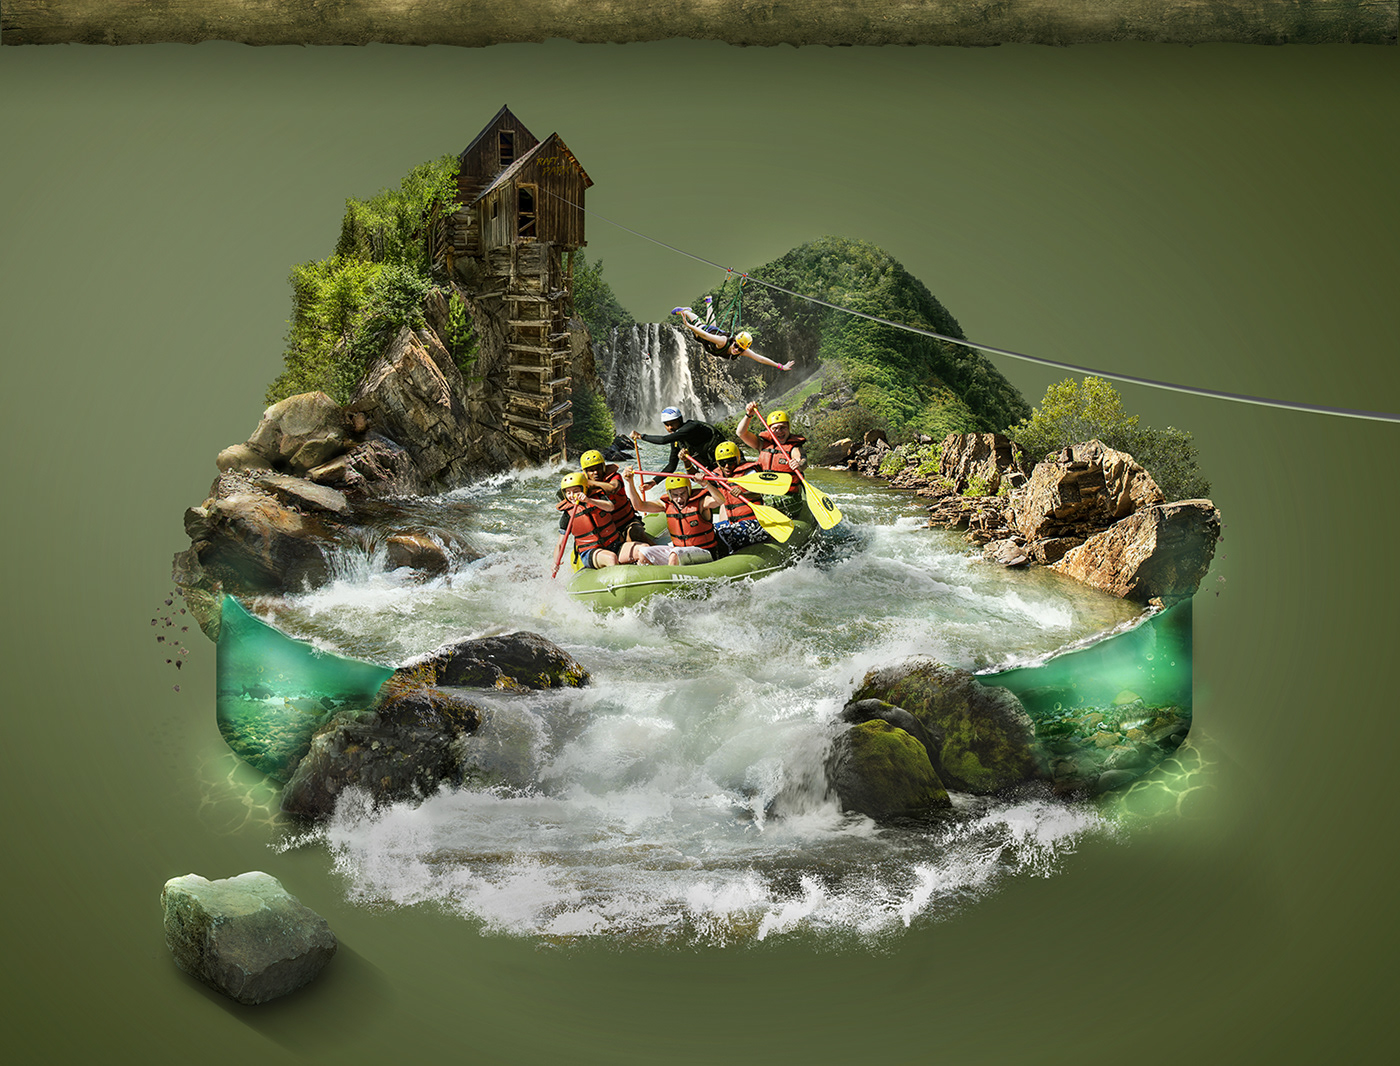 manipulation river underwater underriver rapids boat adventure waterfall jungle